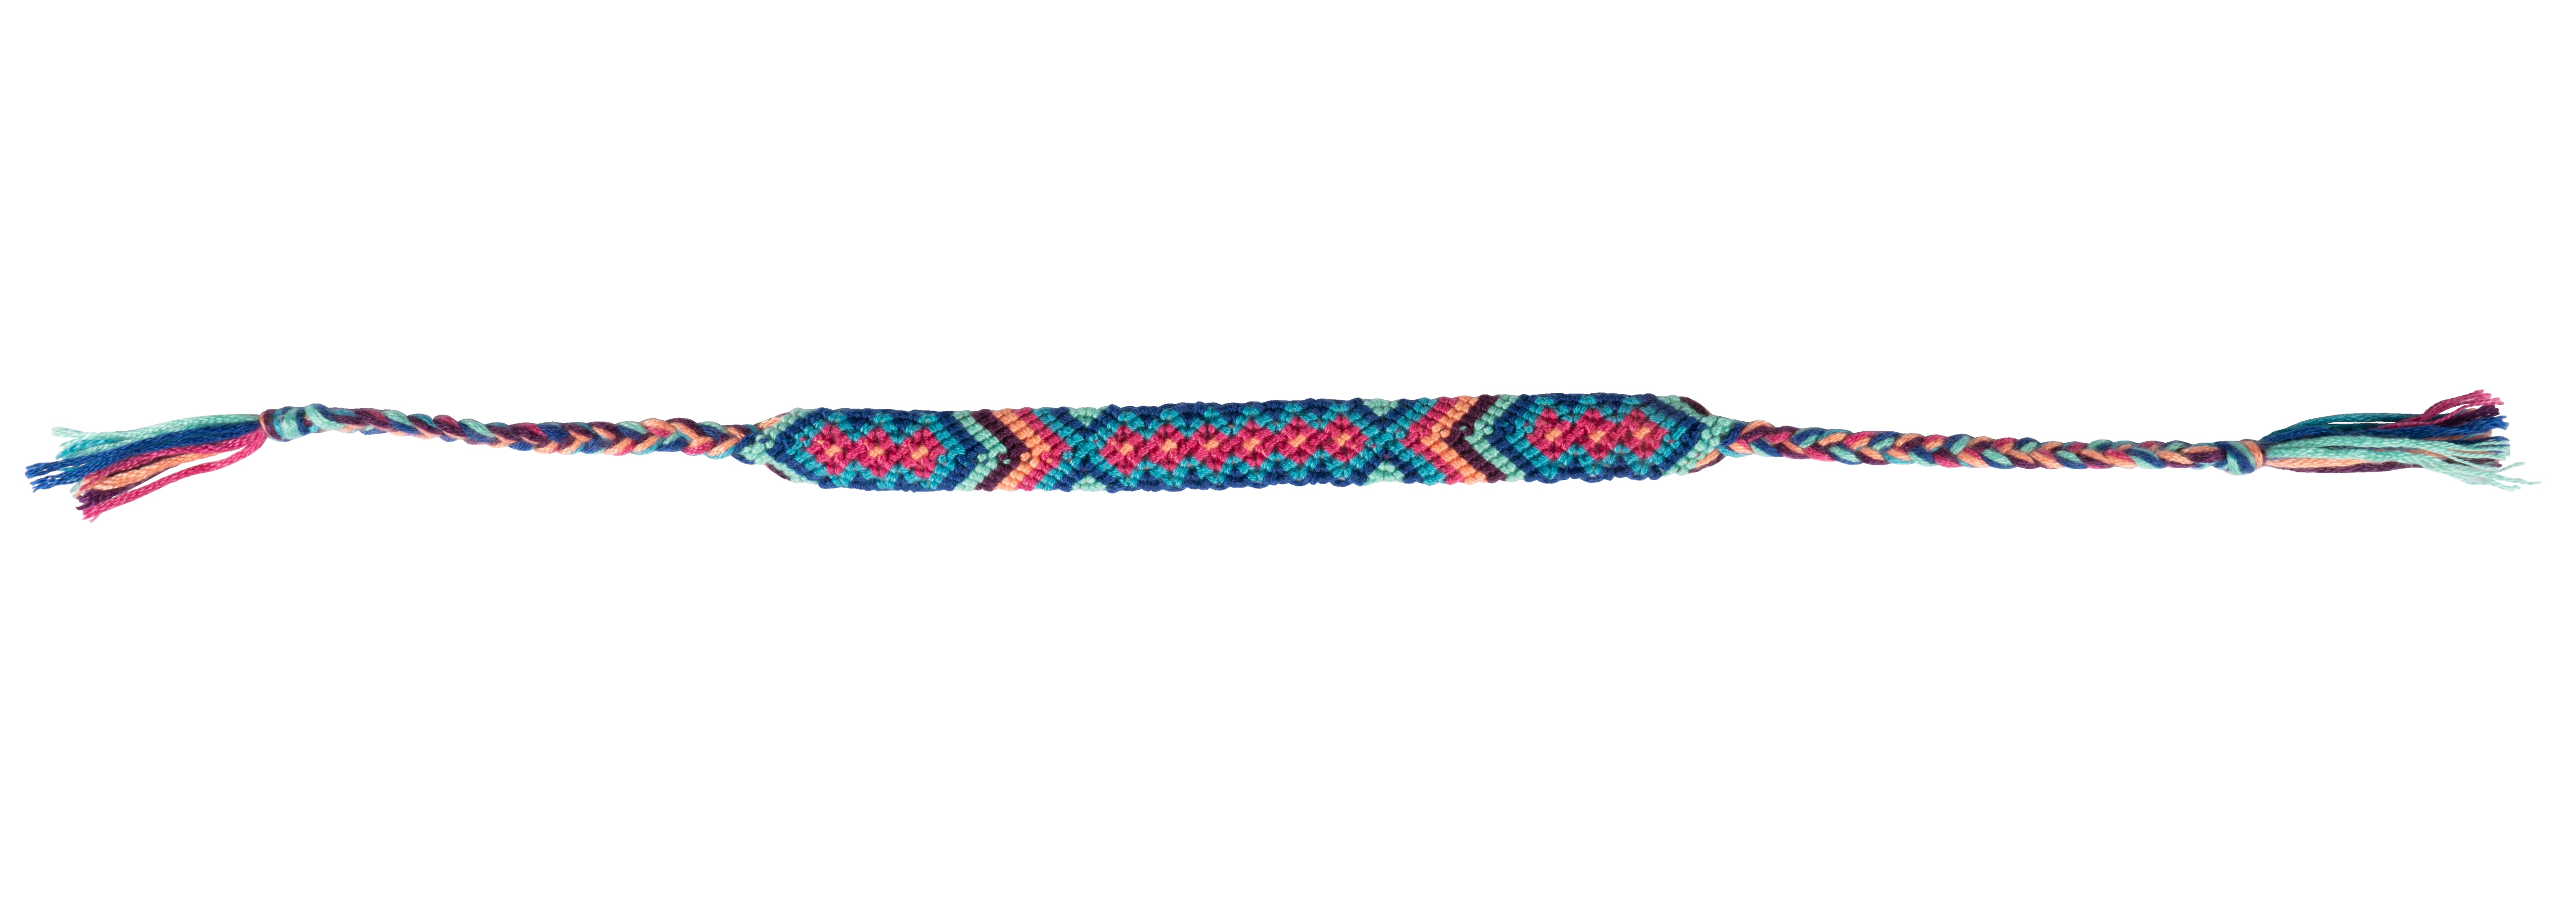 Bracelet Handmade from Peruvian Textile | eBay